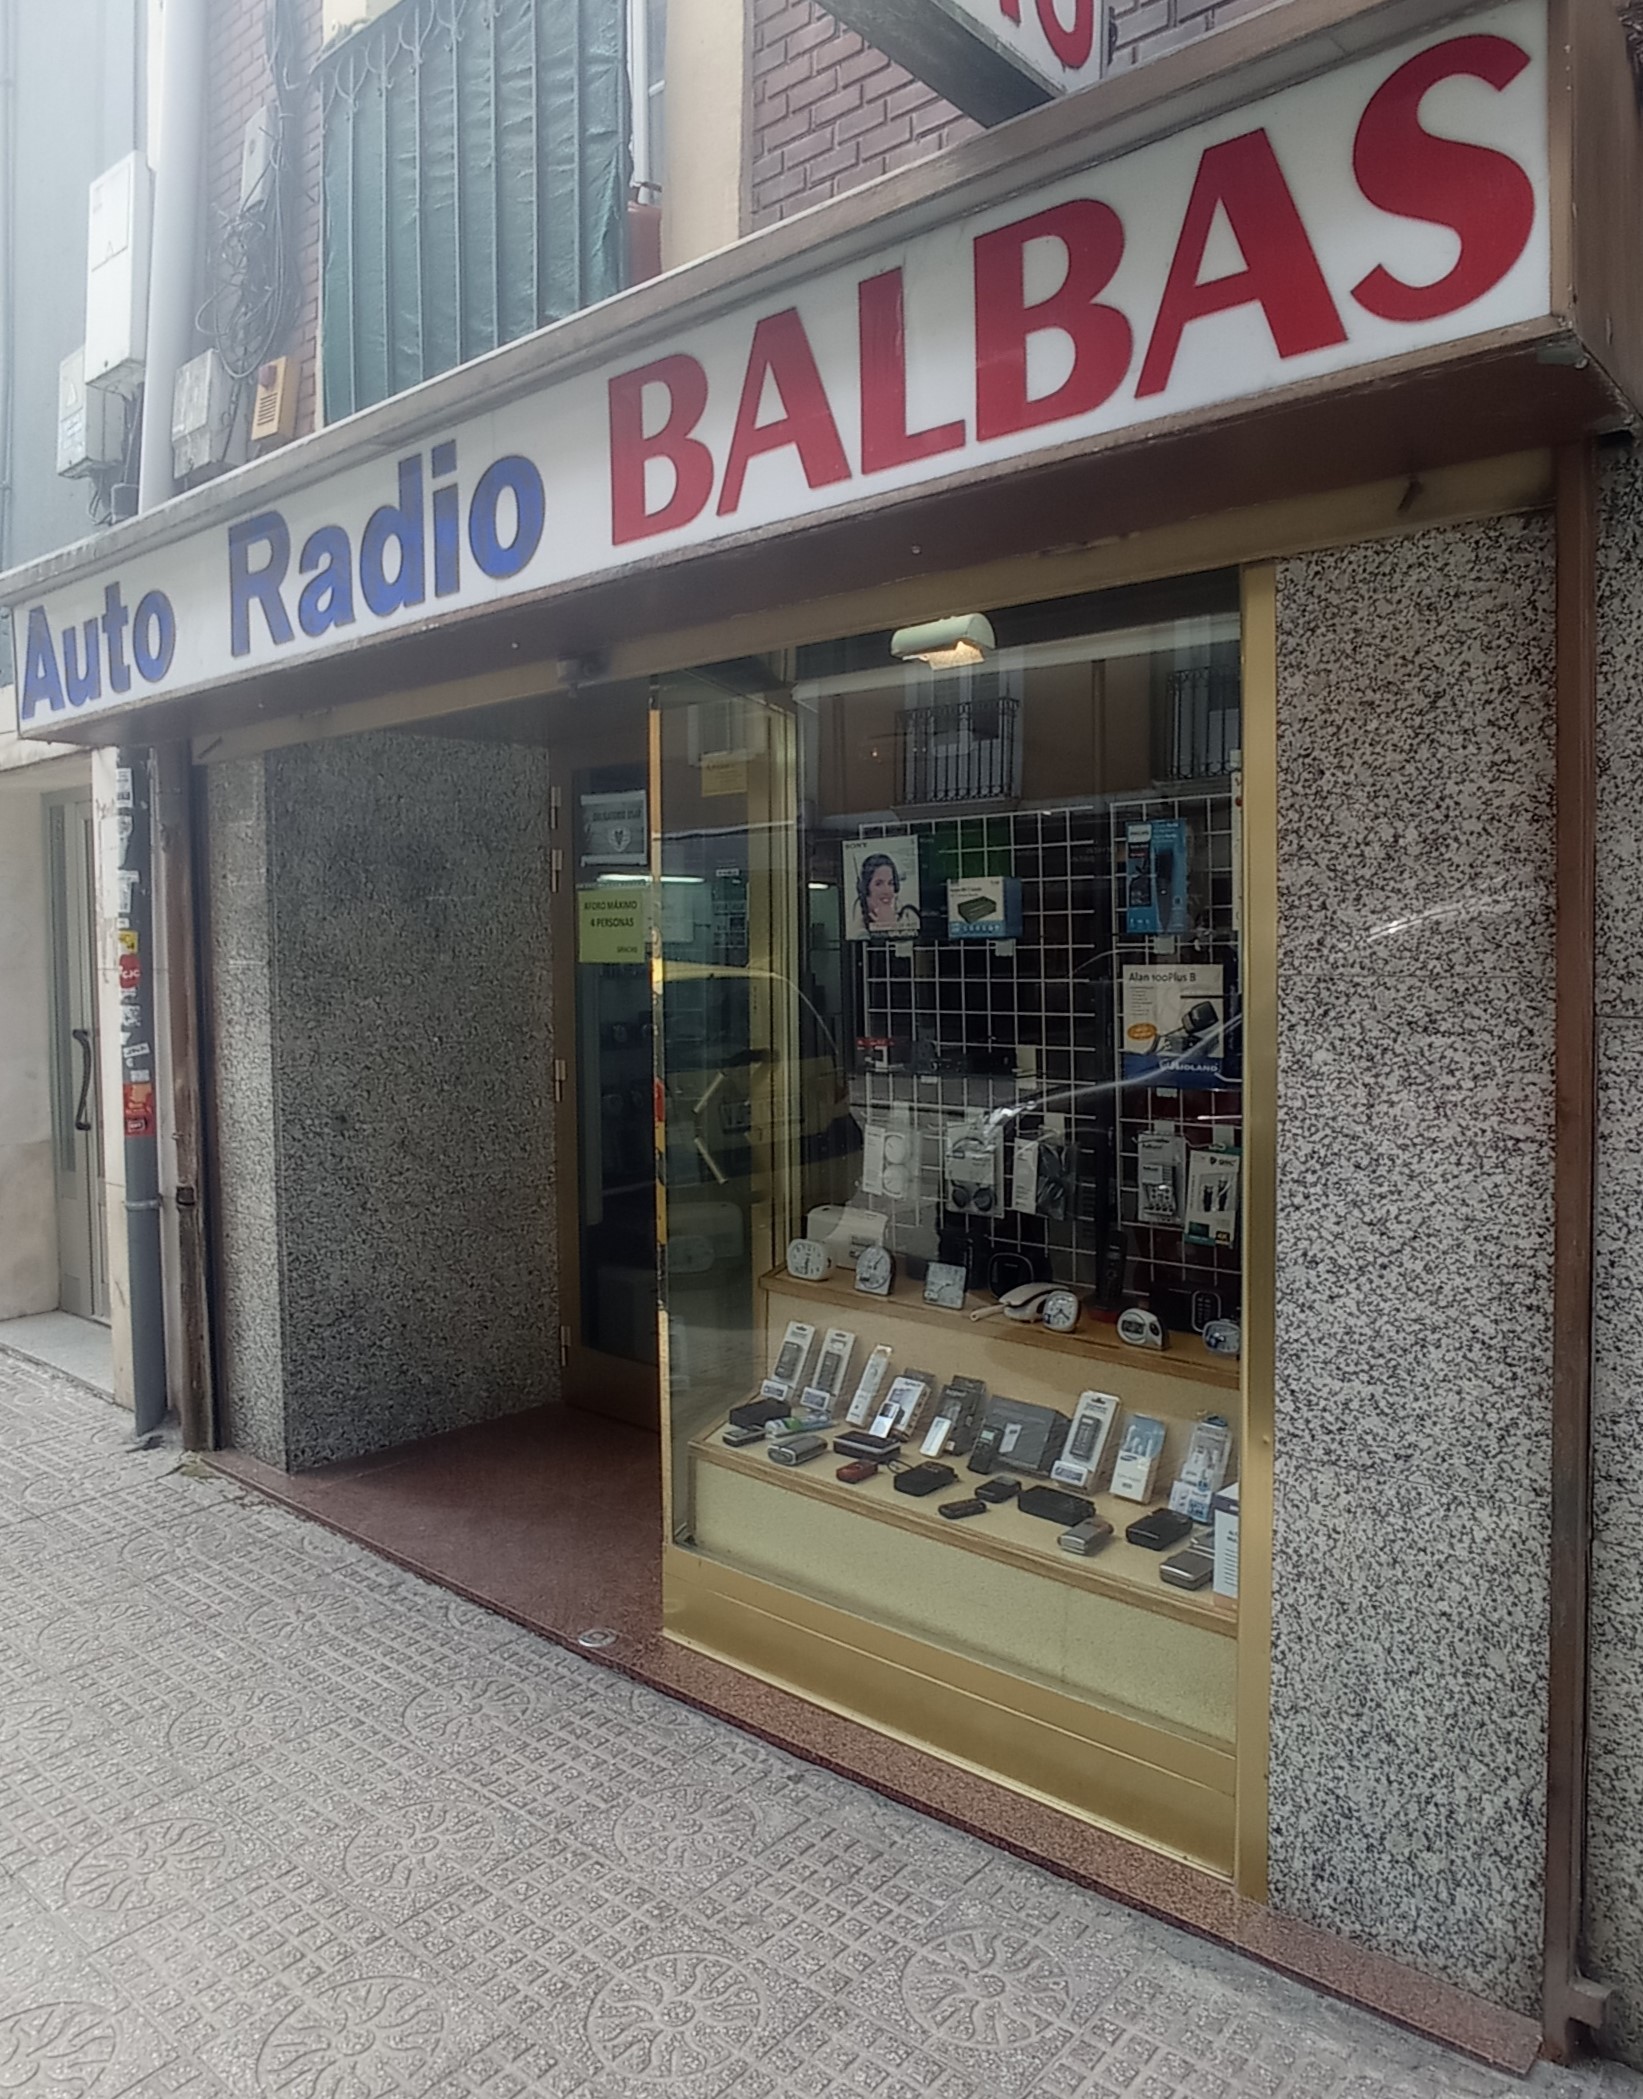 Auto Radio Balbas